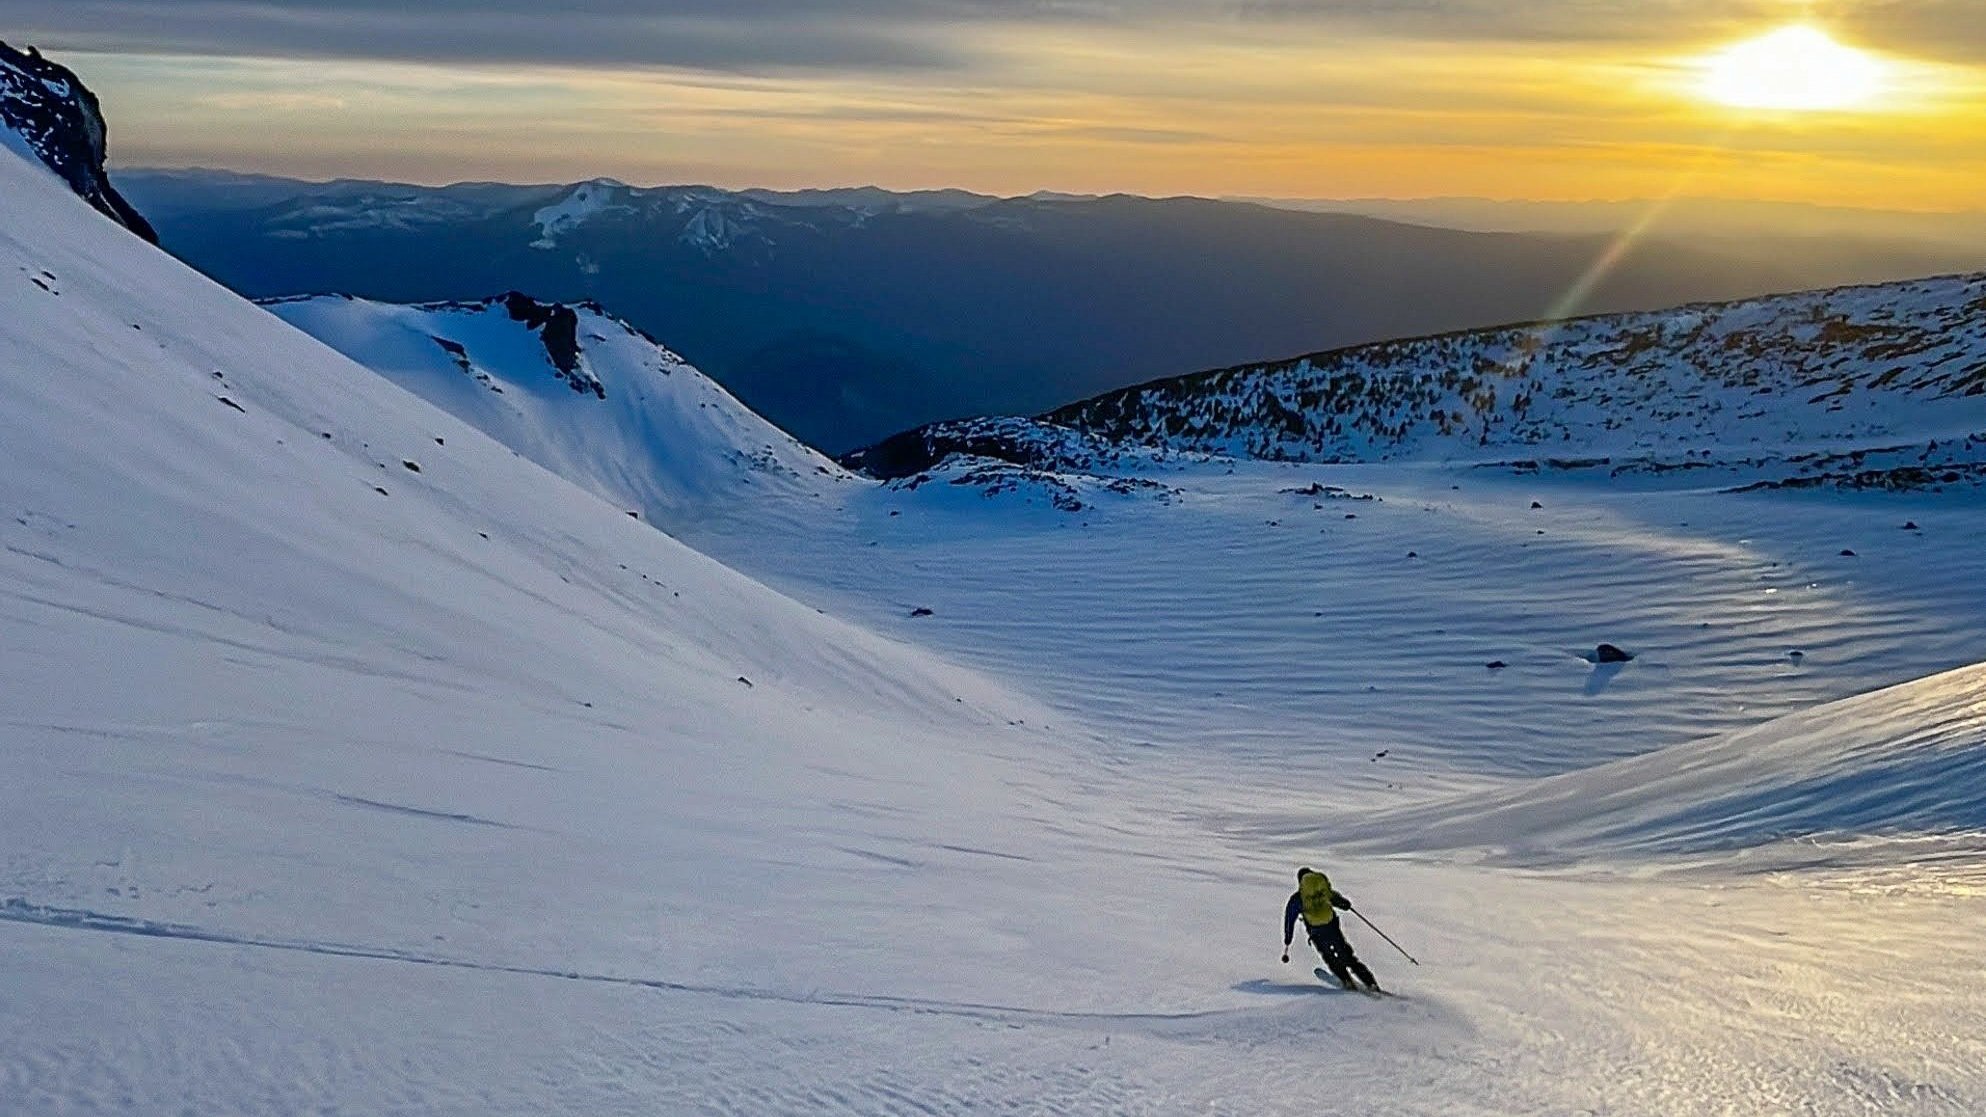 Corn+Skiing+at+sunset+in+Hidden+Valley+on+Mt.+Shasta.jpg